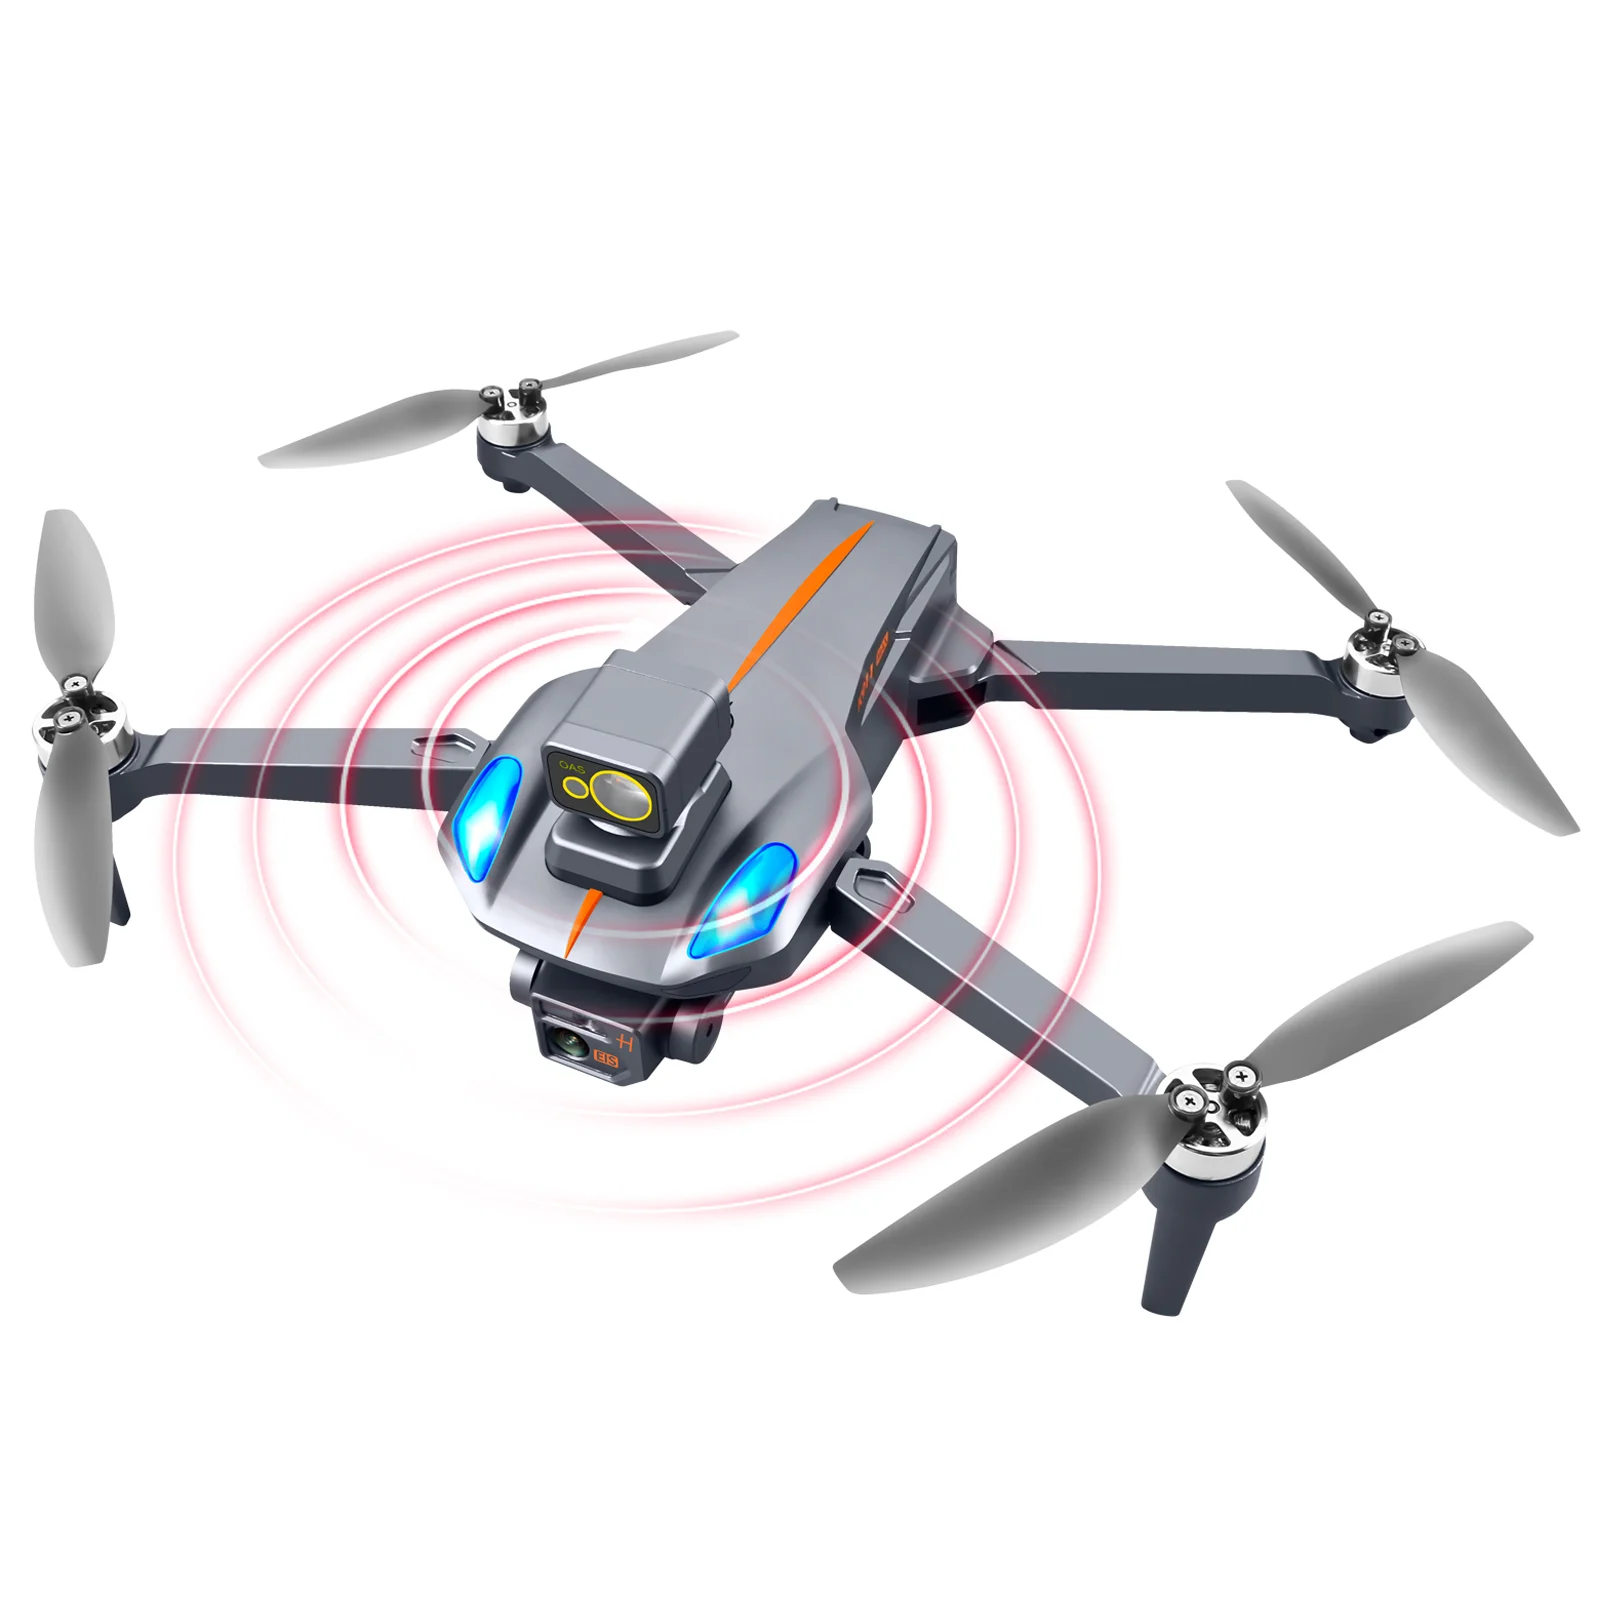 

20 Minutes Long Flight Duration Battery Life 1.2KM Radius 8K ESC Dual Camera Smart Return K911 Max Professional RC GPS Drone